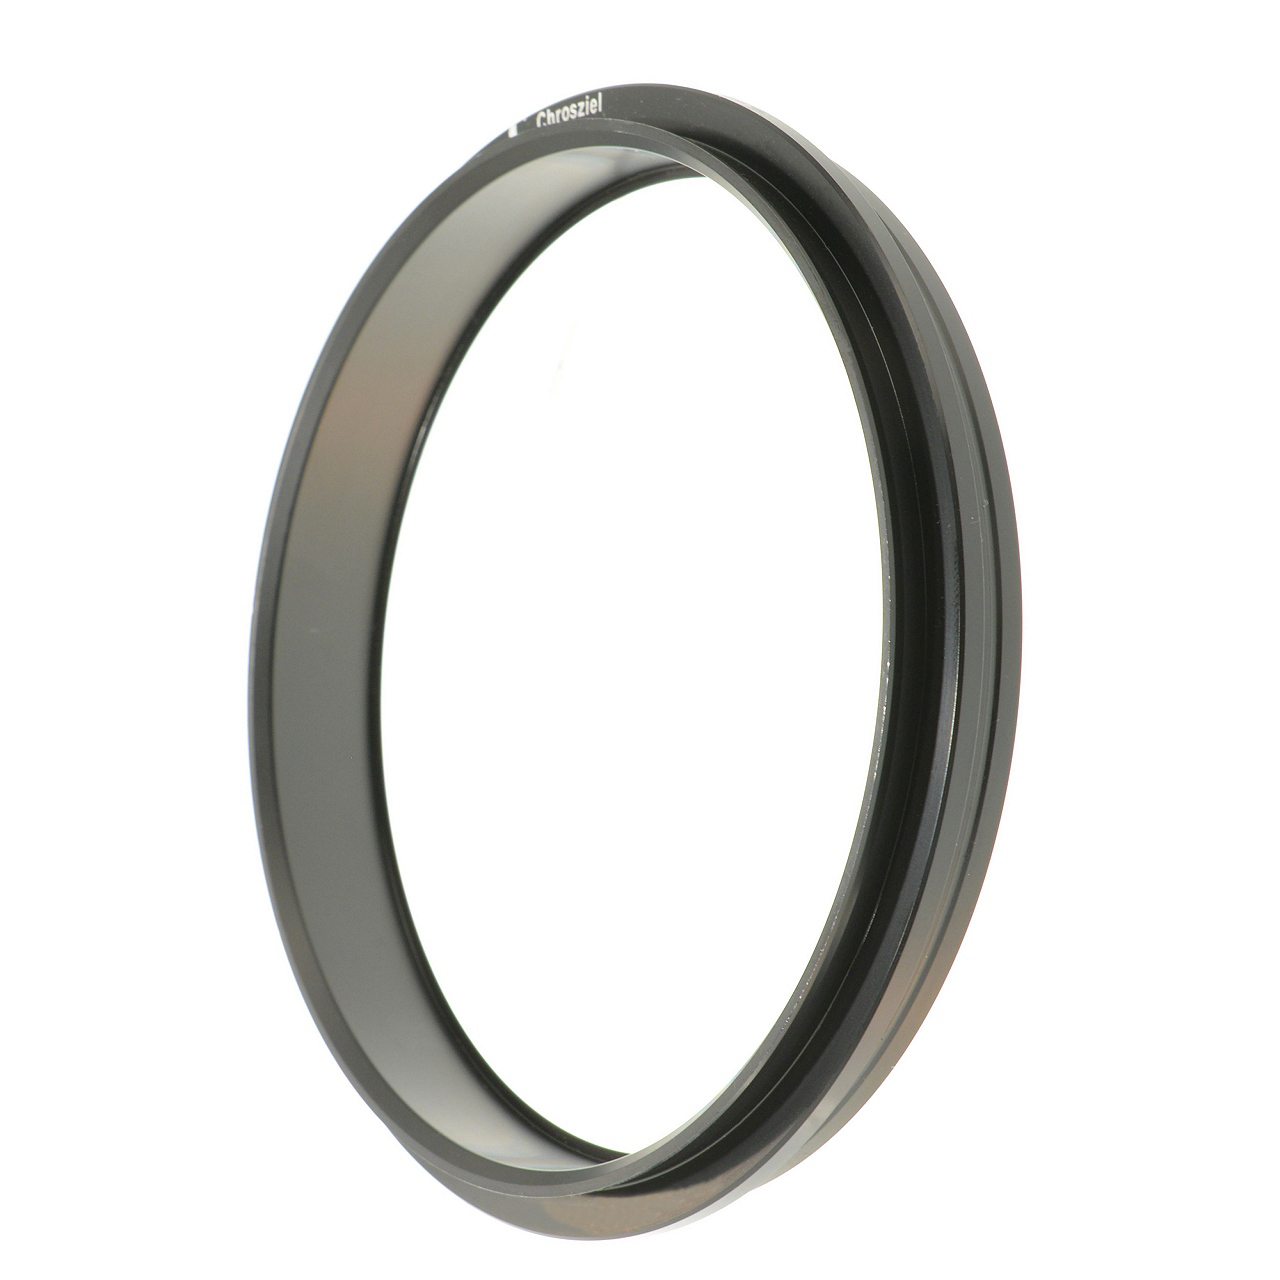 Retaining Ring Ø 142,5:135 mm